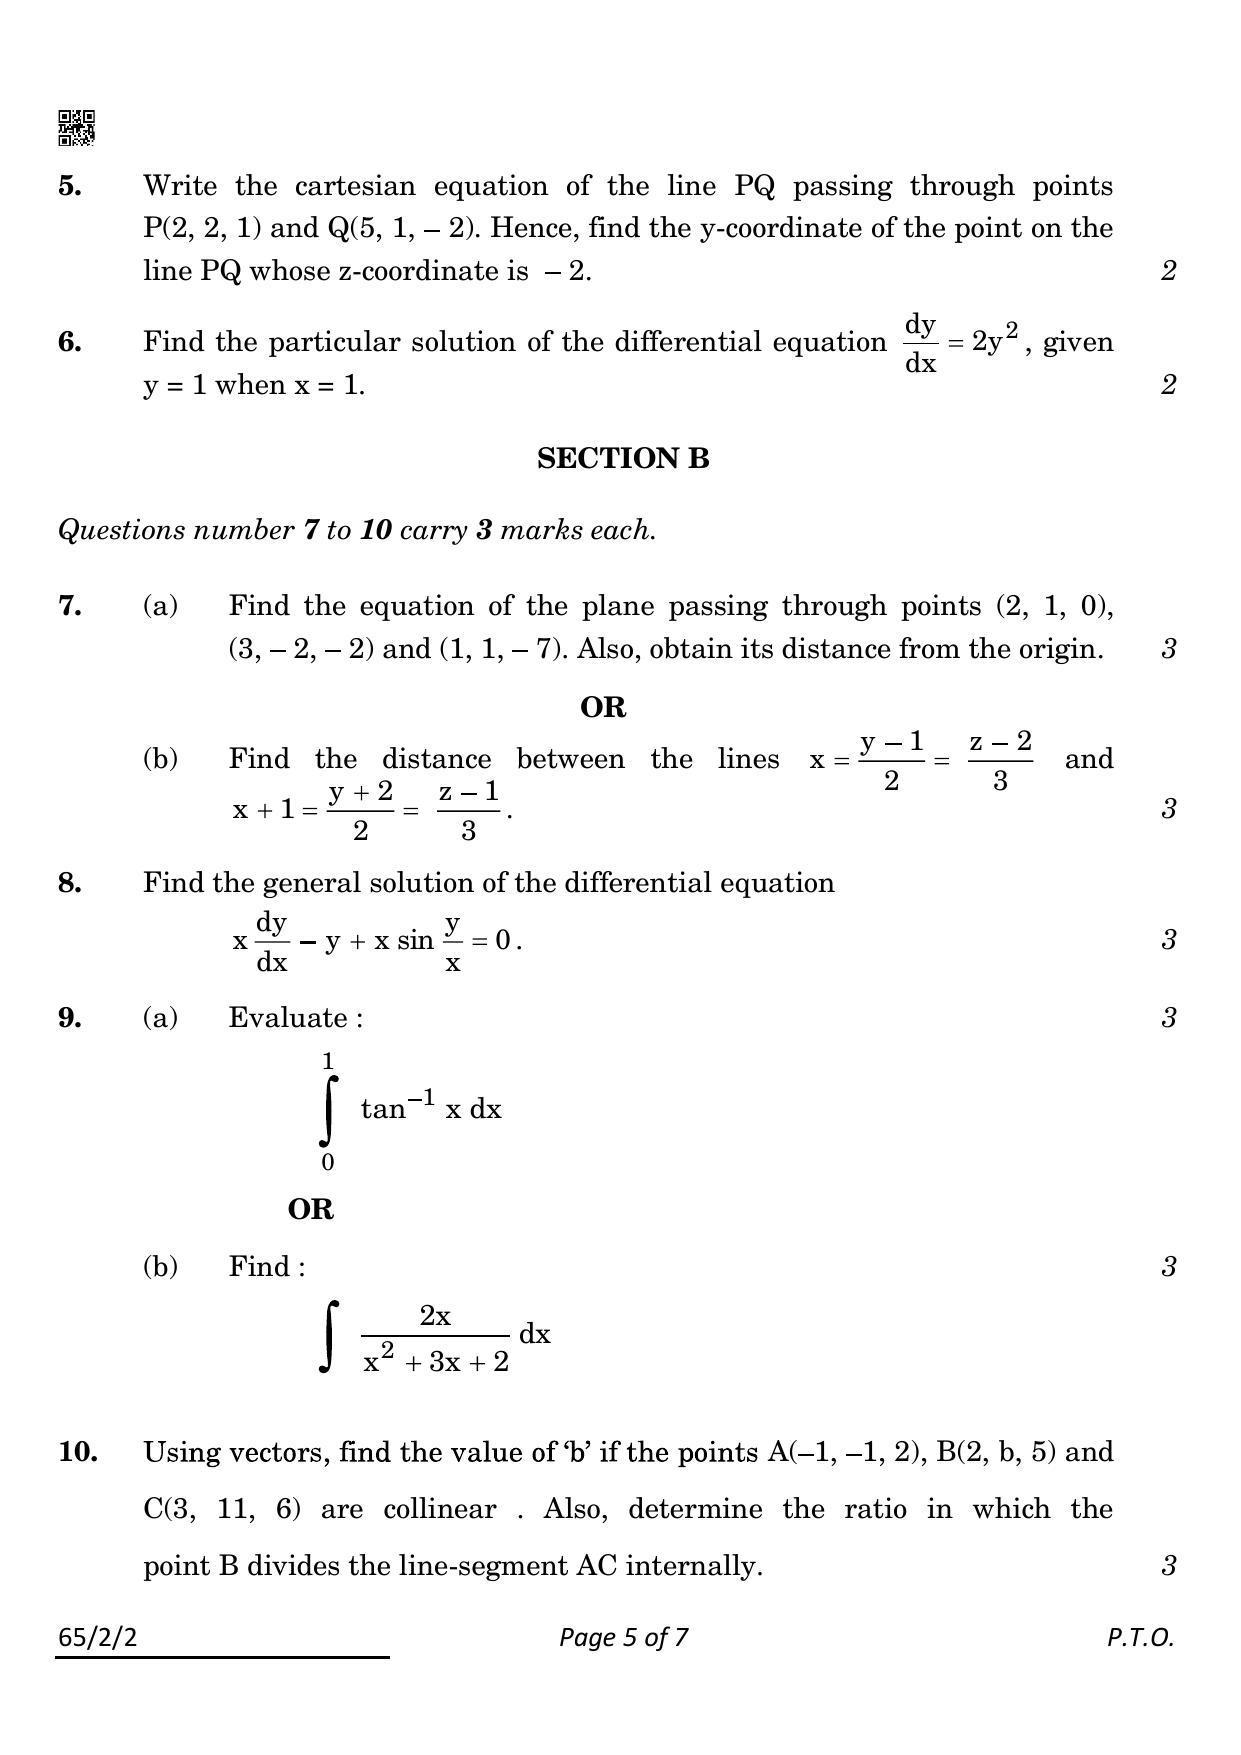 CBSE Class 12 65-2-2 Mathematics 2022 Question Paper - Page 5